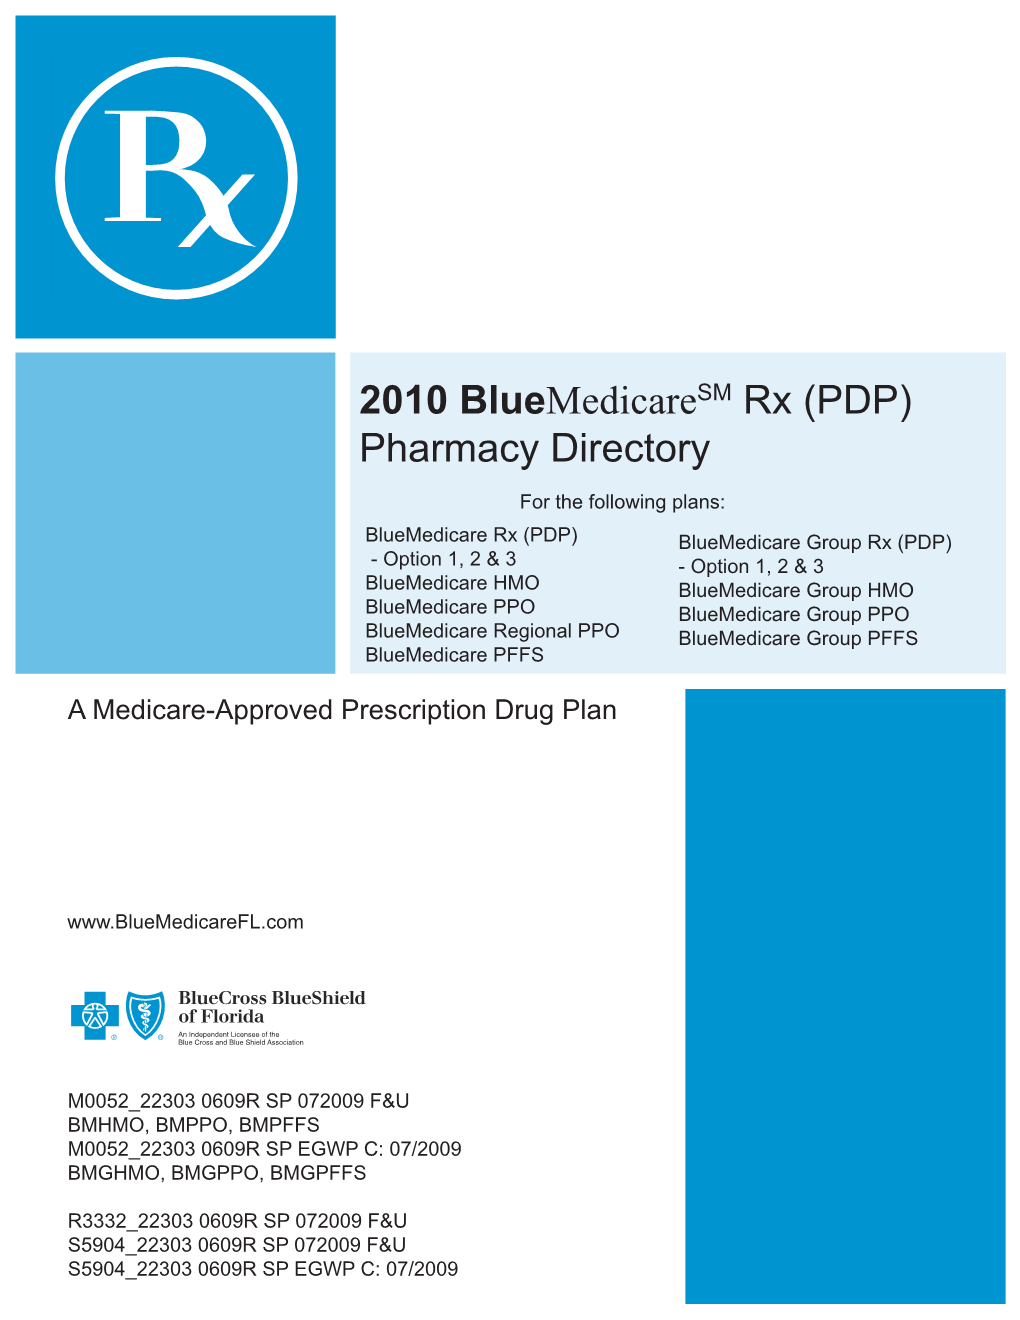 2010 Bluemedicaresm Rx (PDP) Pharmacy Directory